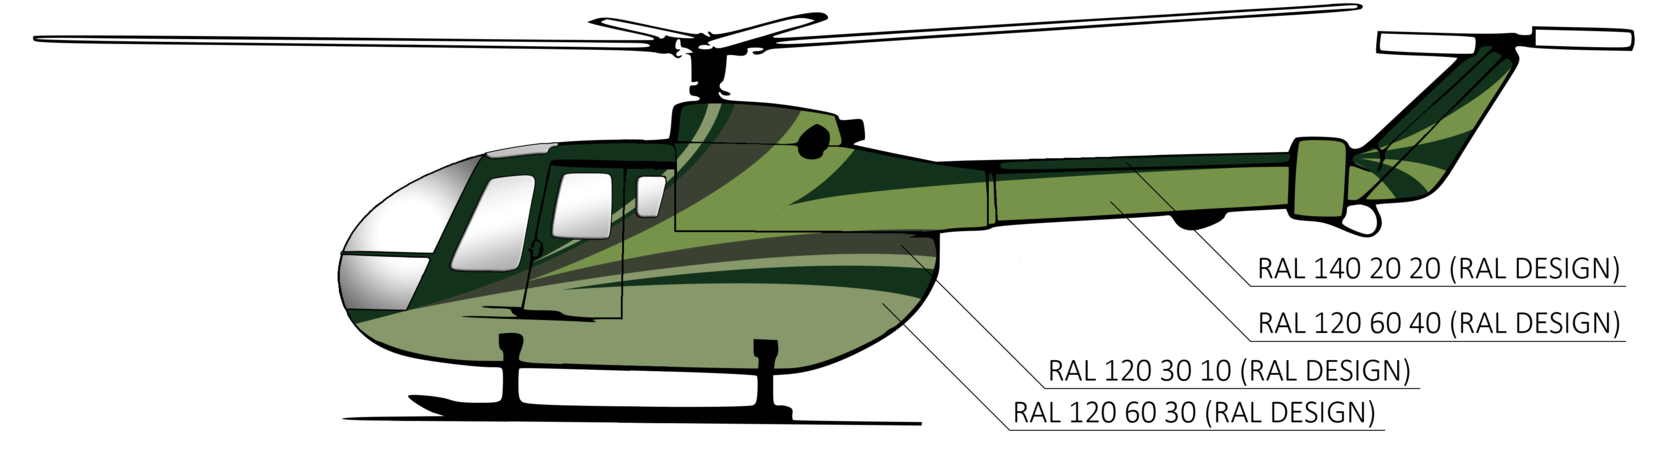 Эскиз ливреи Bo 105